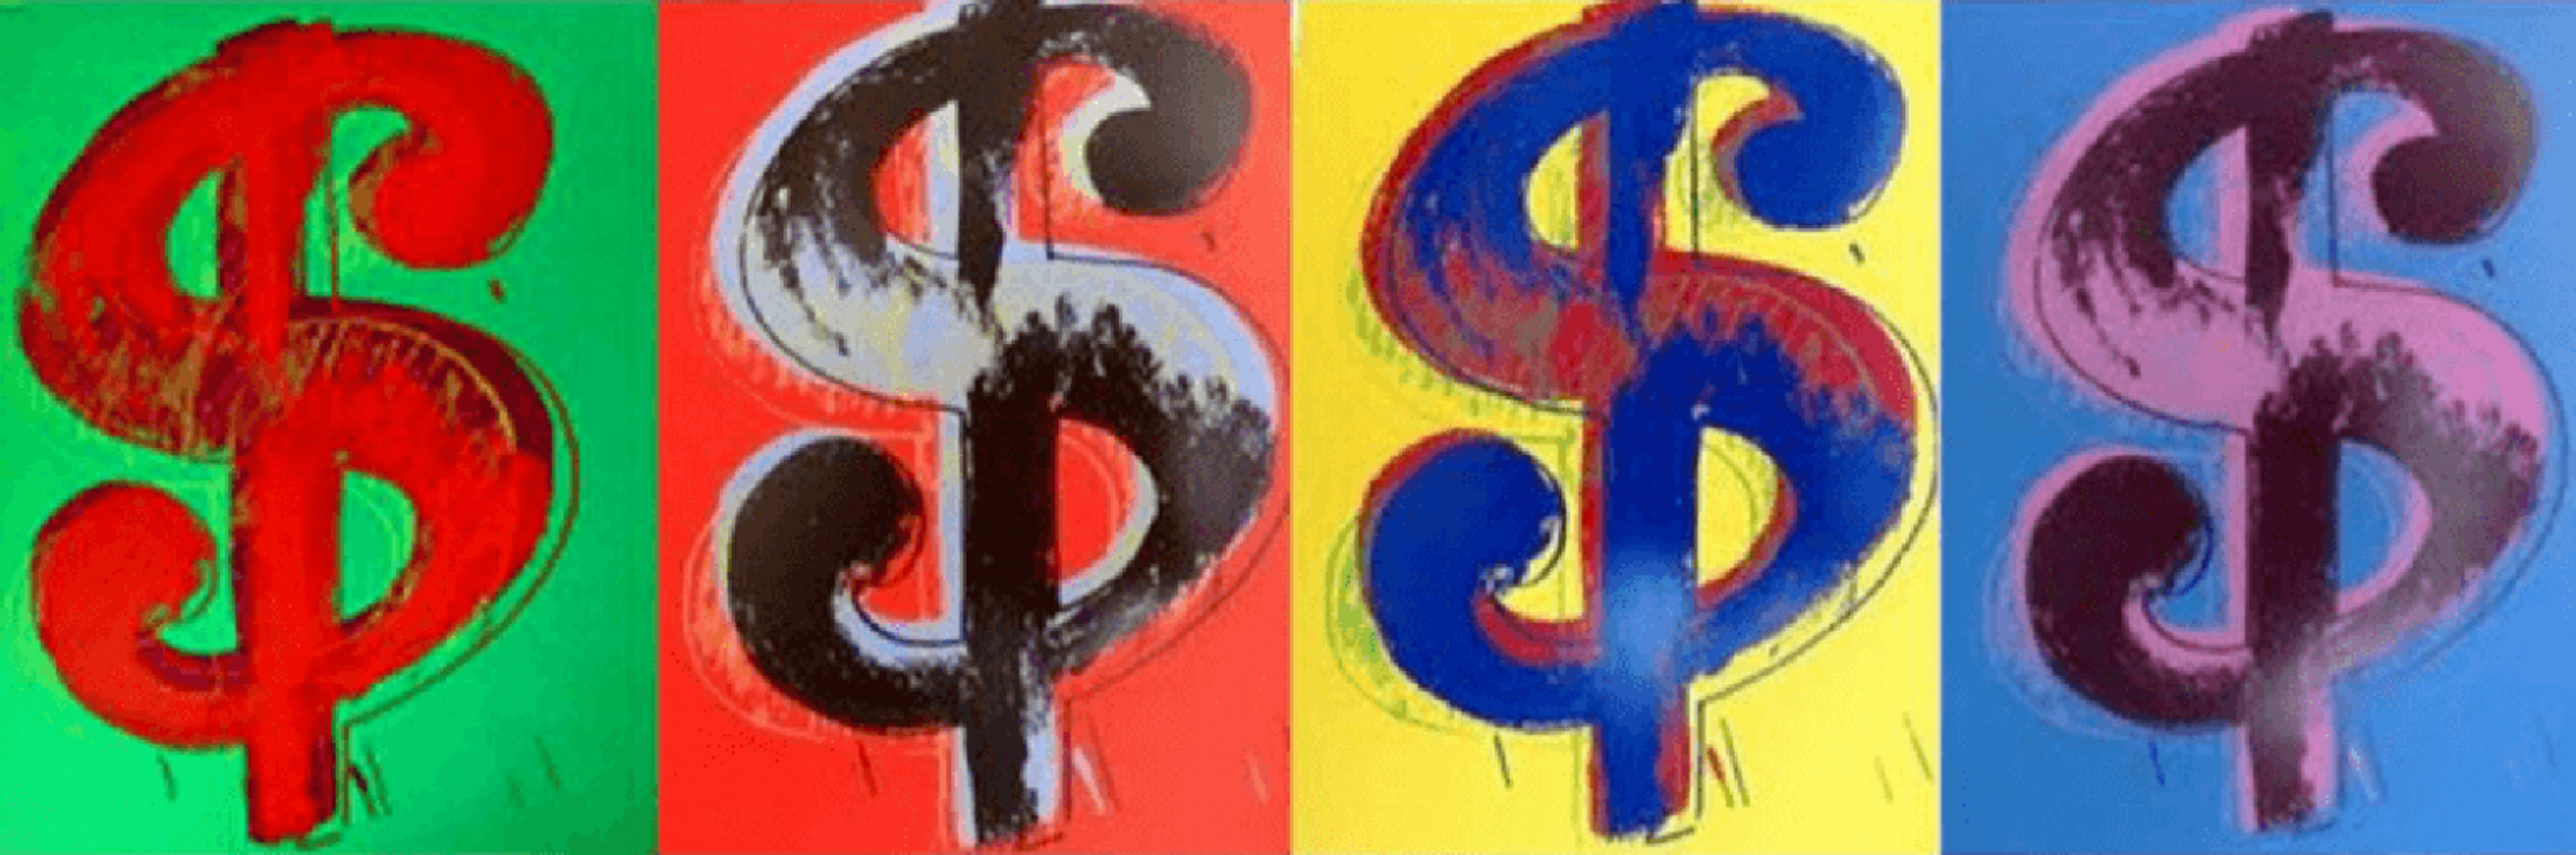 Dollar Signs by Andy Warhol - MyArtBroker